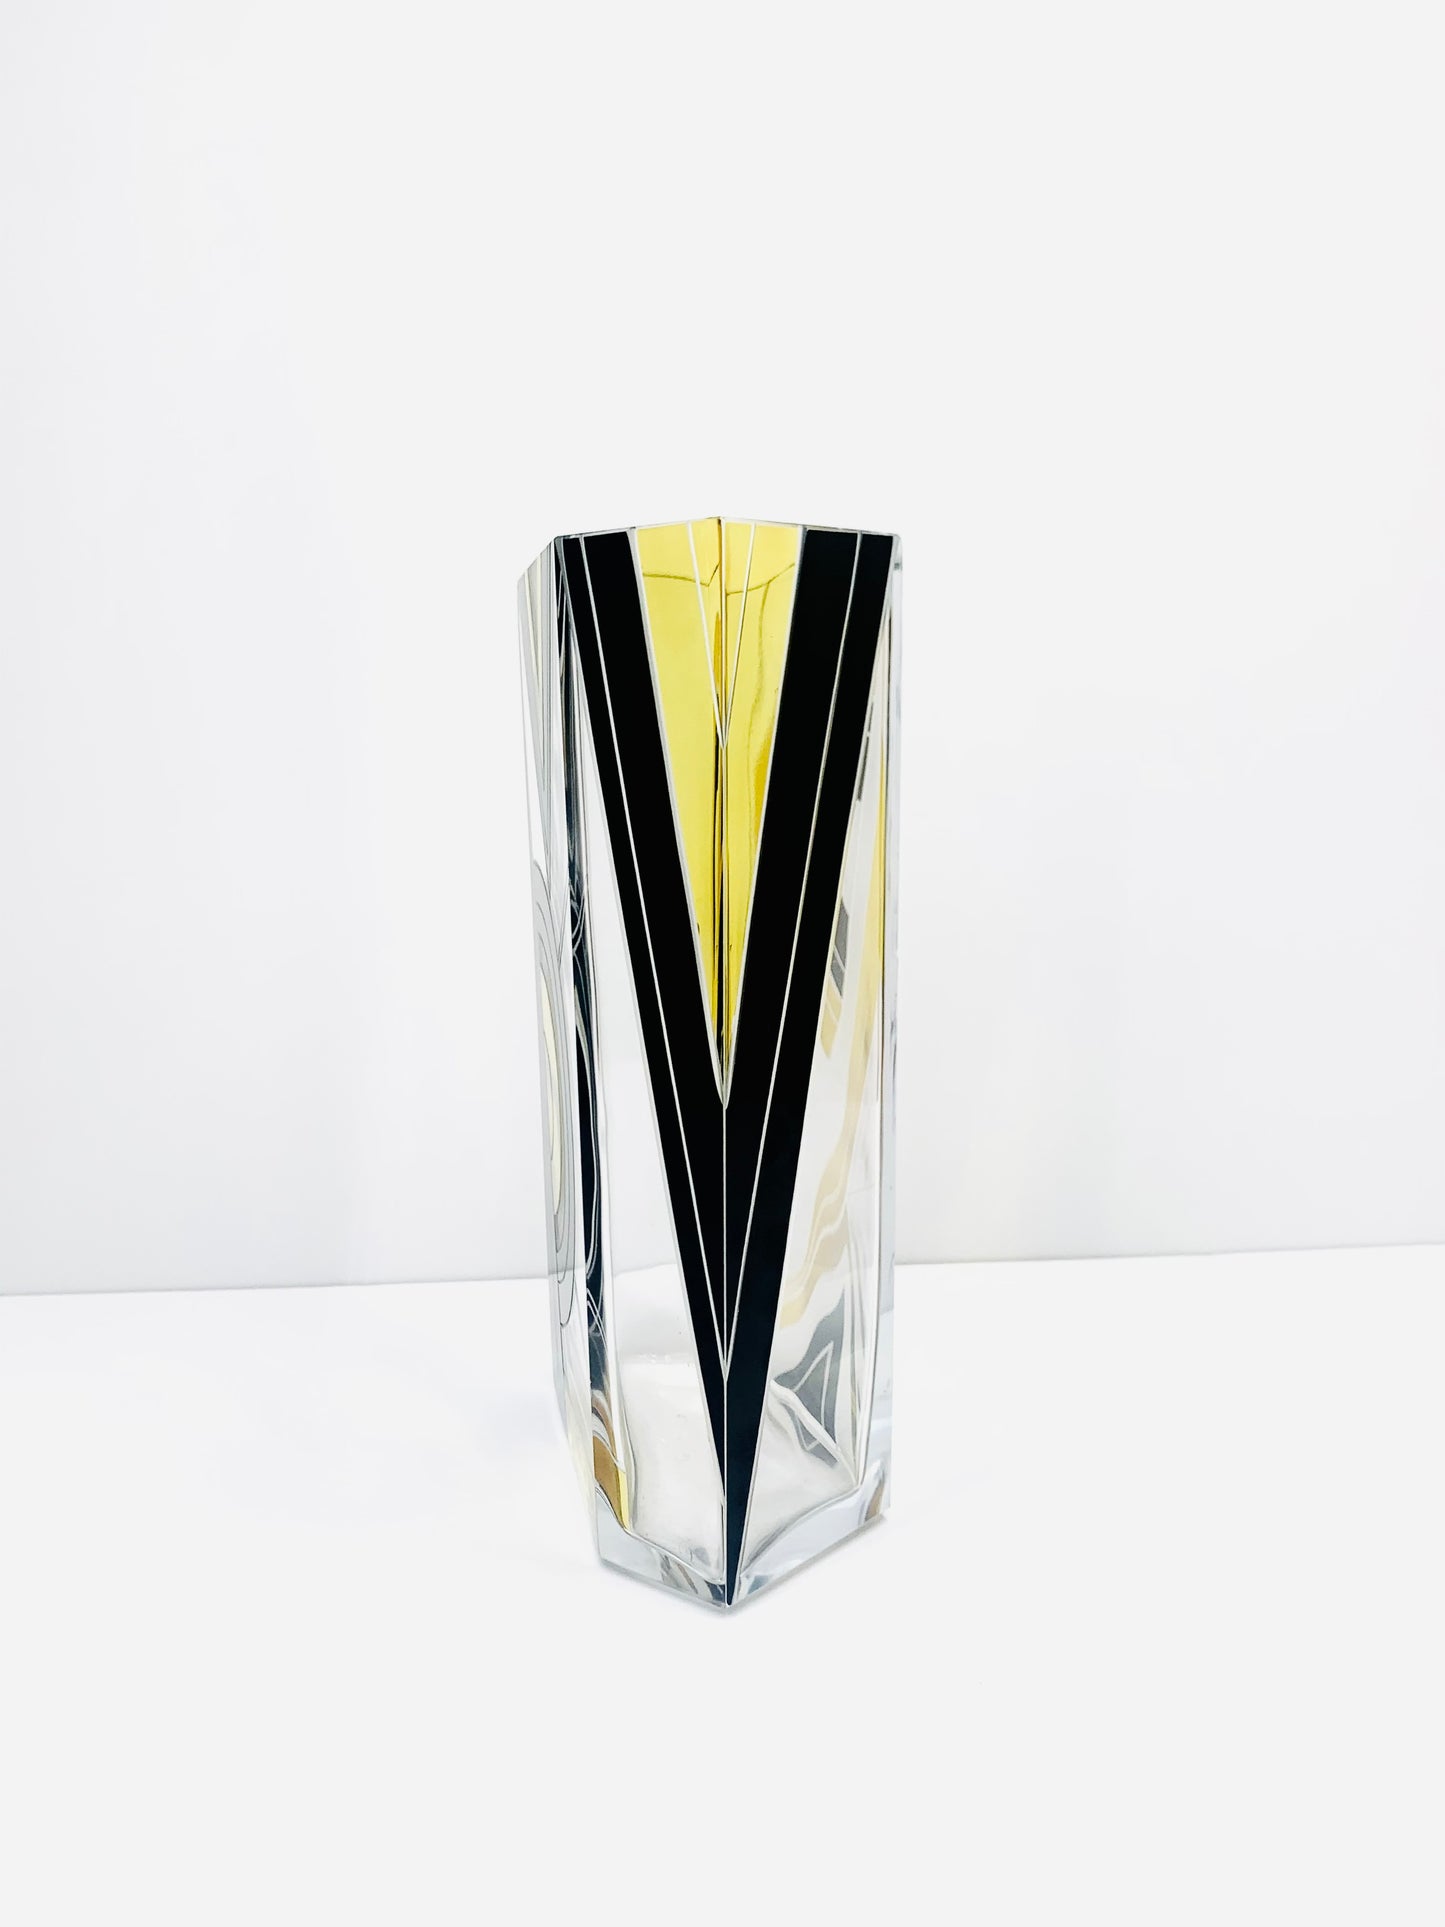 Antique Art Deco black and yellow enamel glass vase by Karl Palda